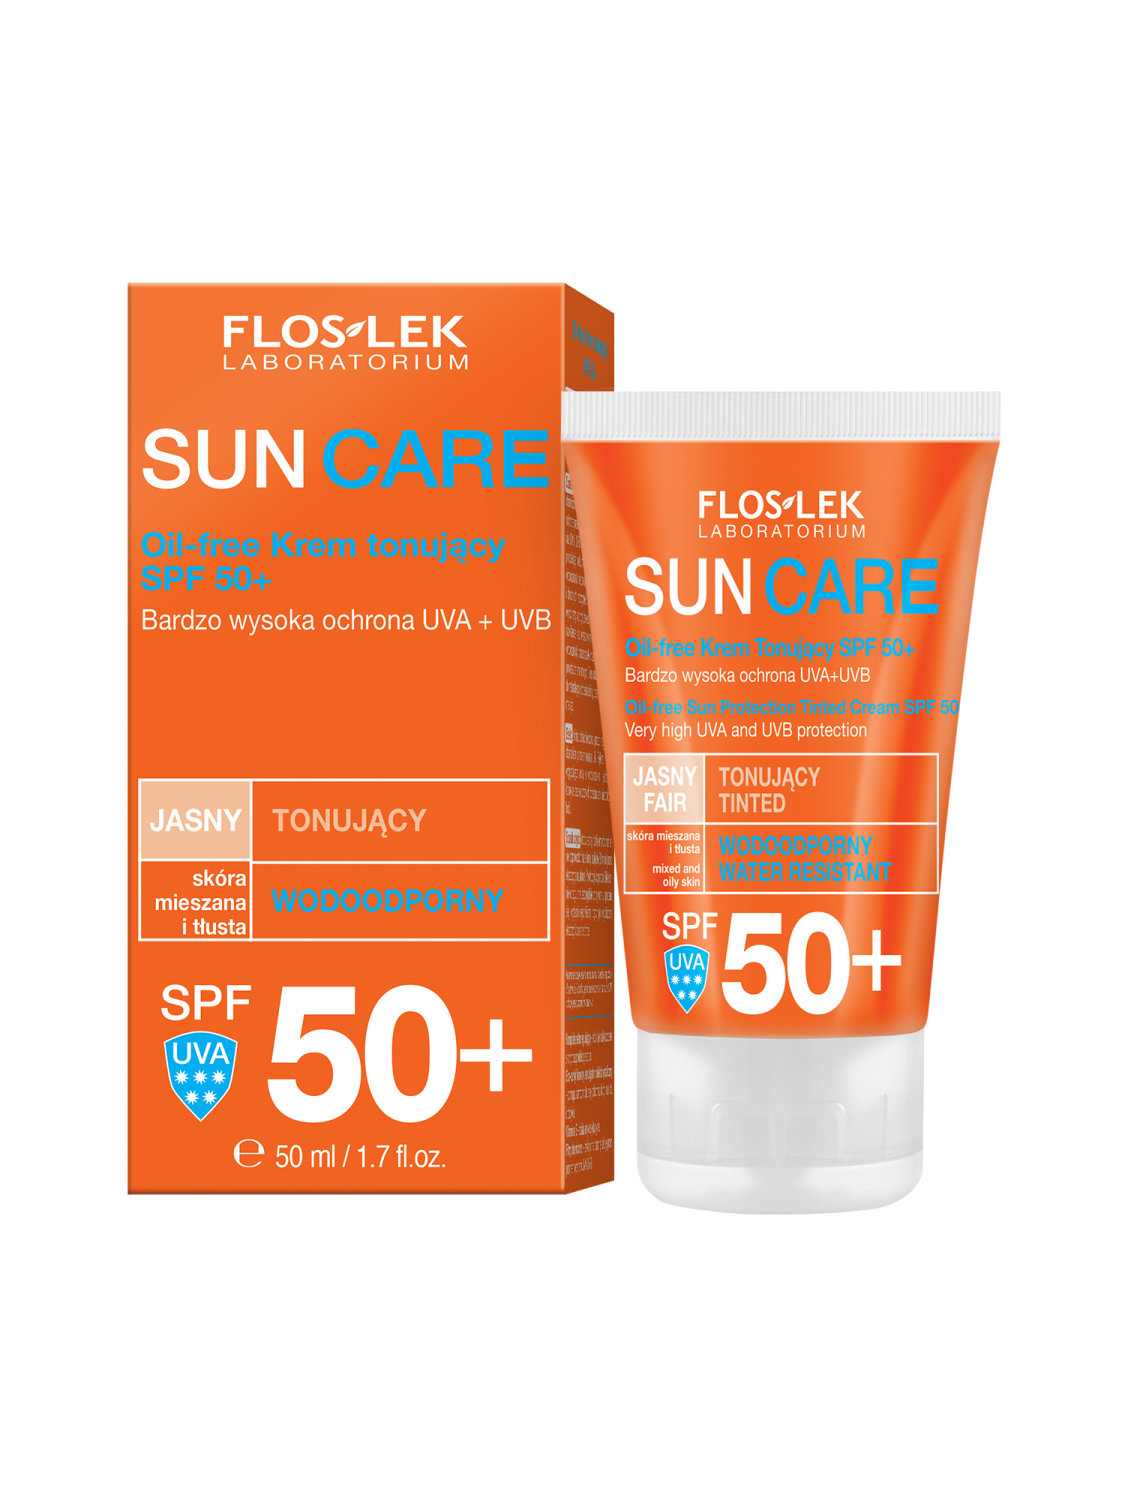 SUN CARE Oil-free Sun Protection Tinted Cream SPF 50+ - 50 ml - Floslek